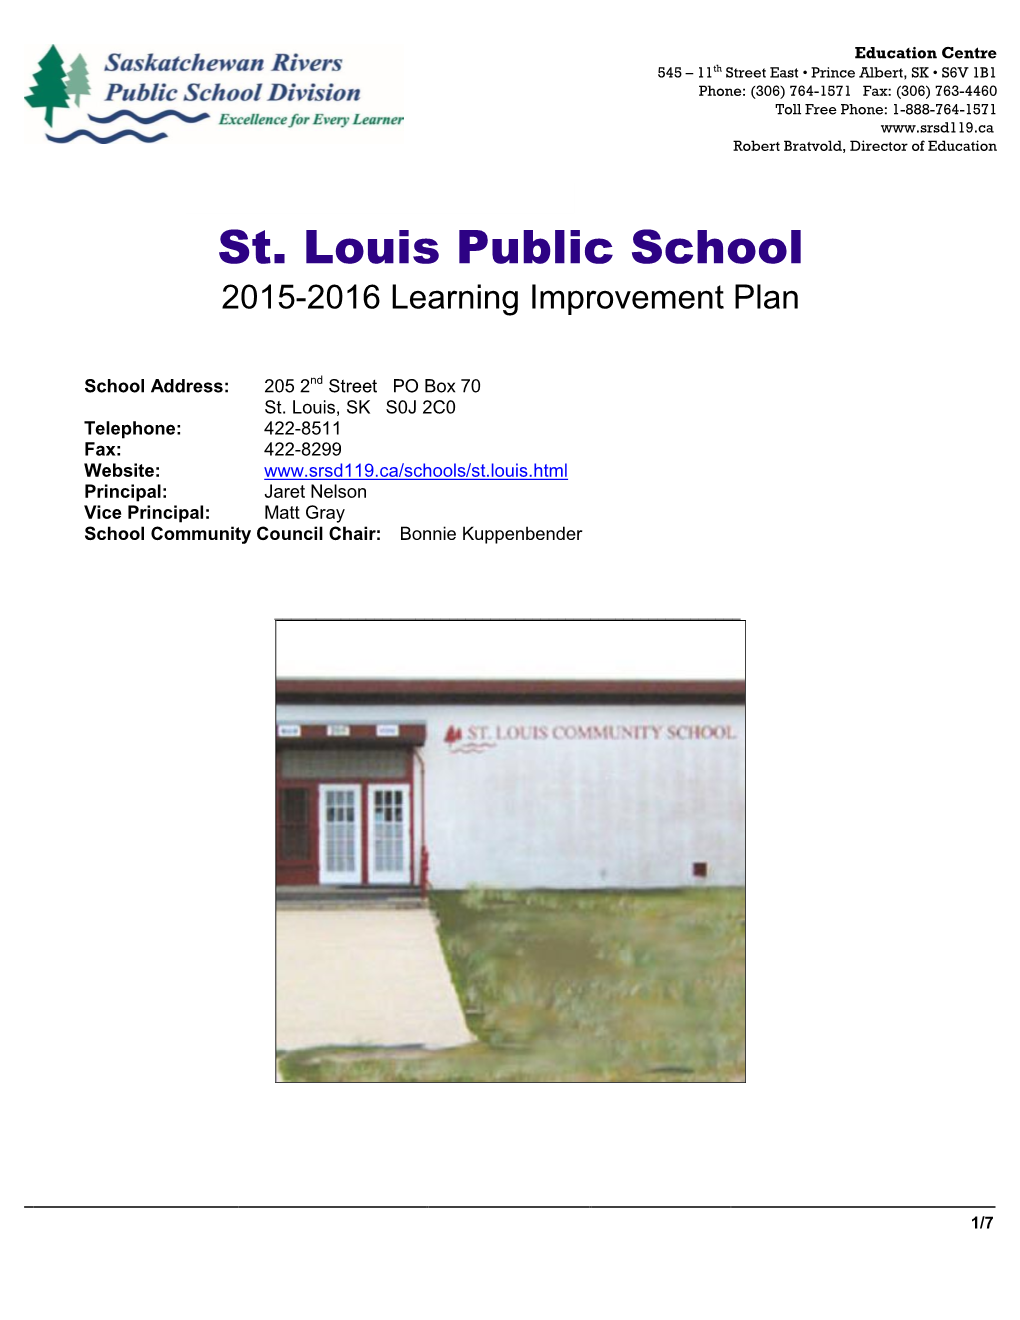 St. Louis Public School 2015-2016 Learning Improvement Plan